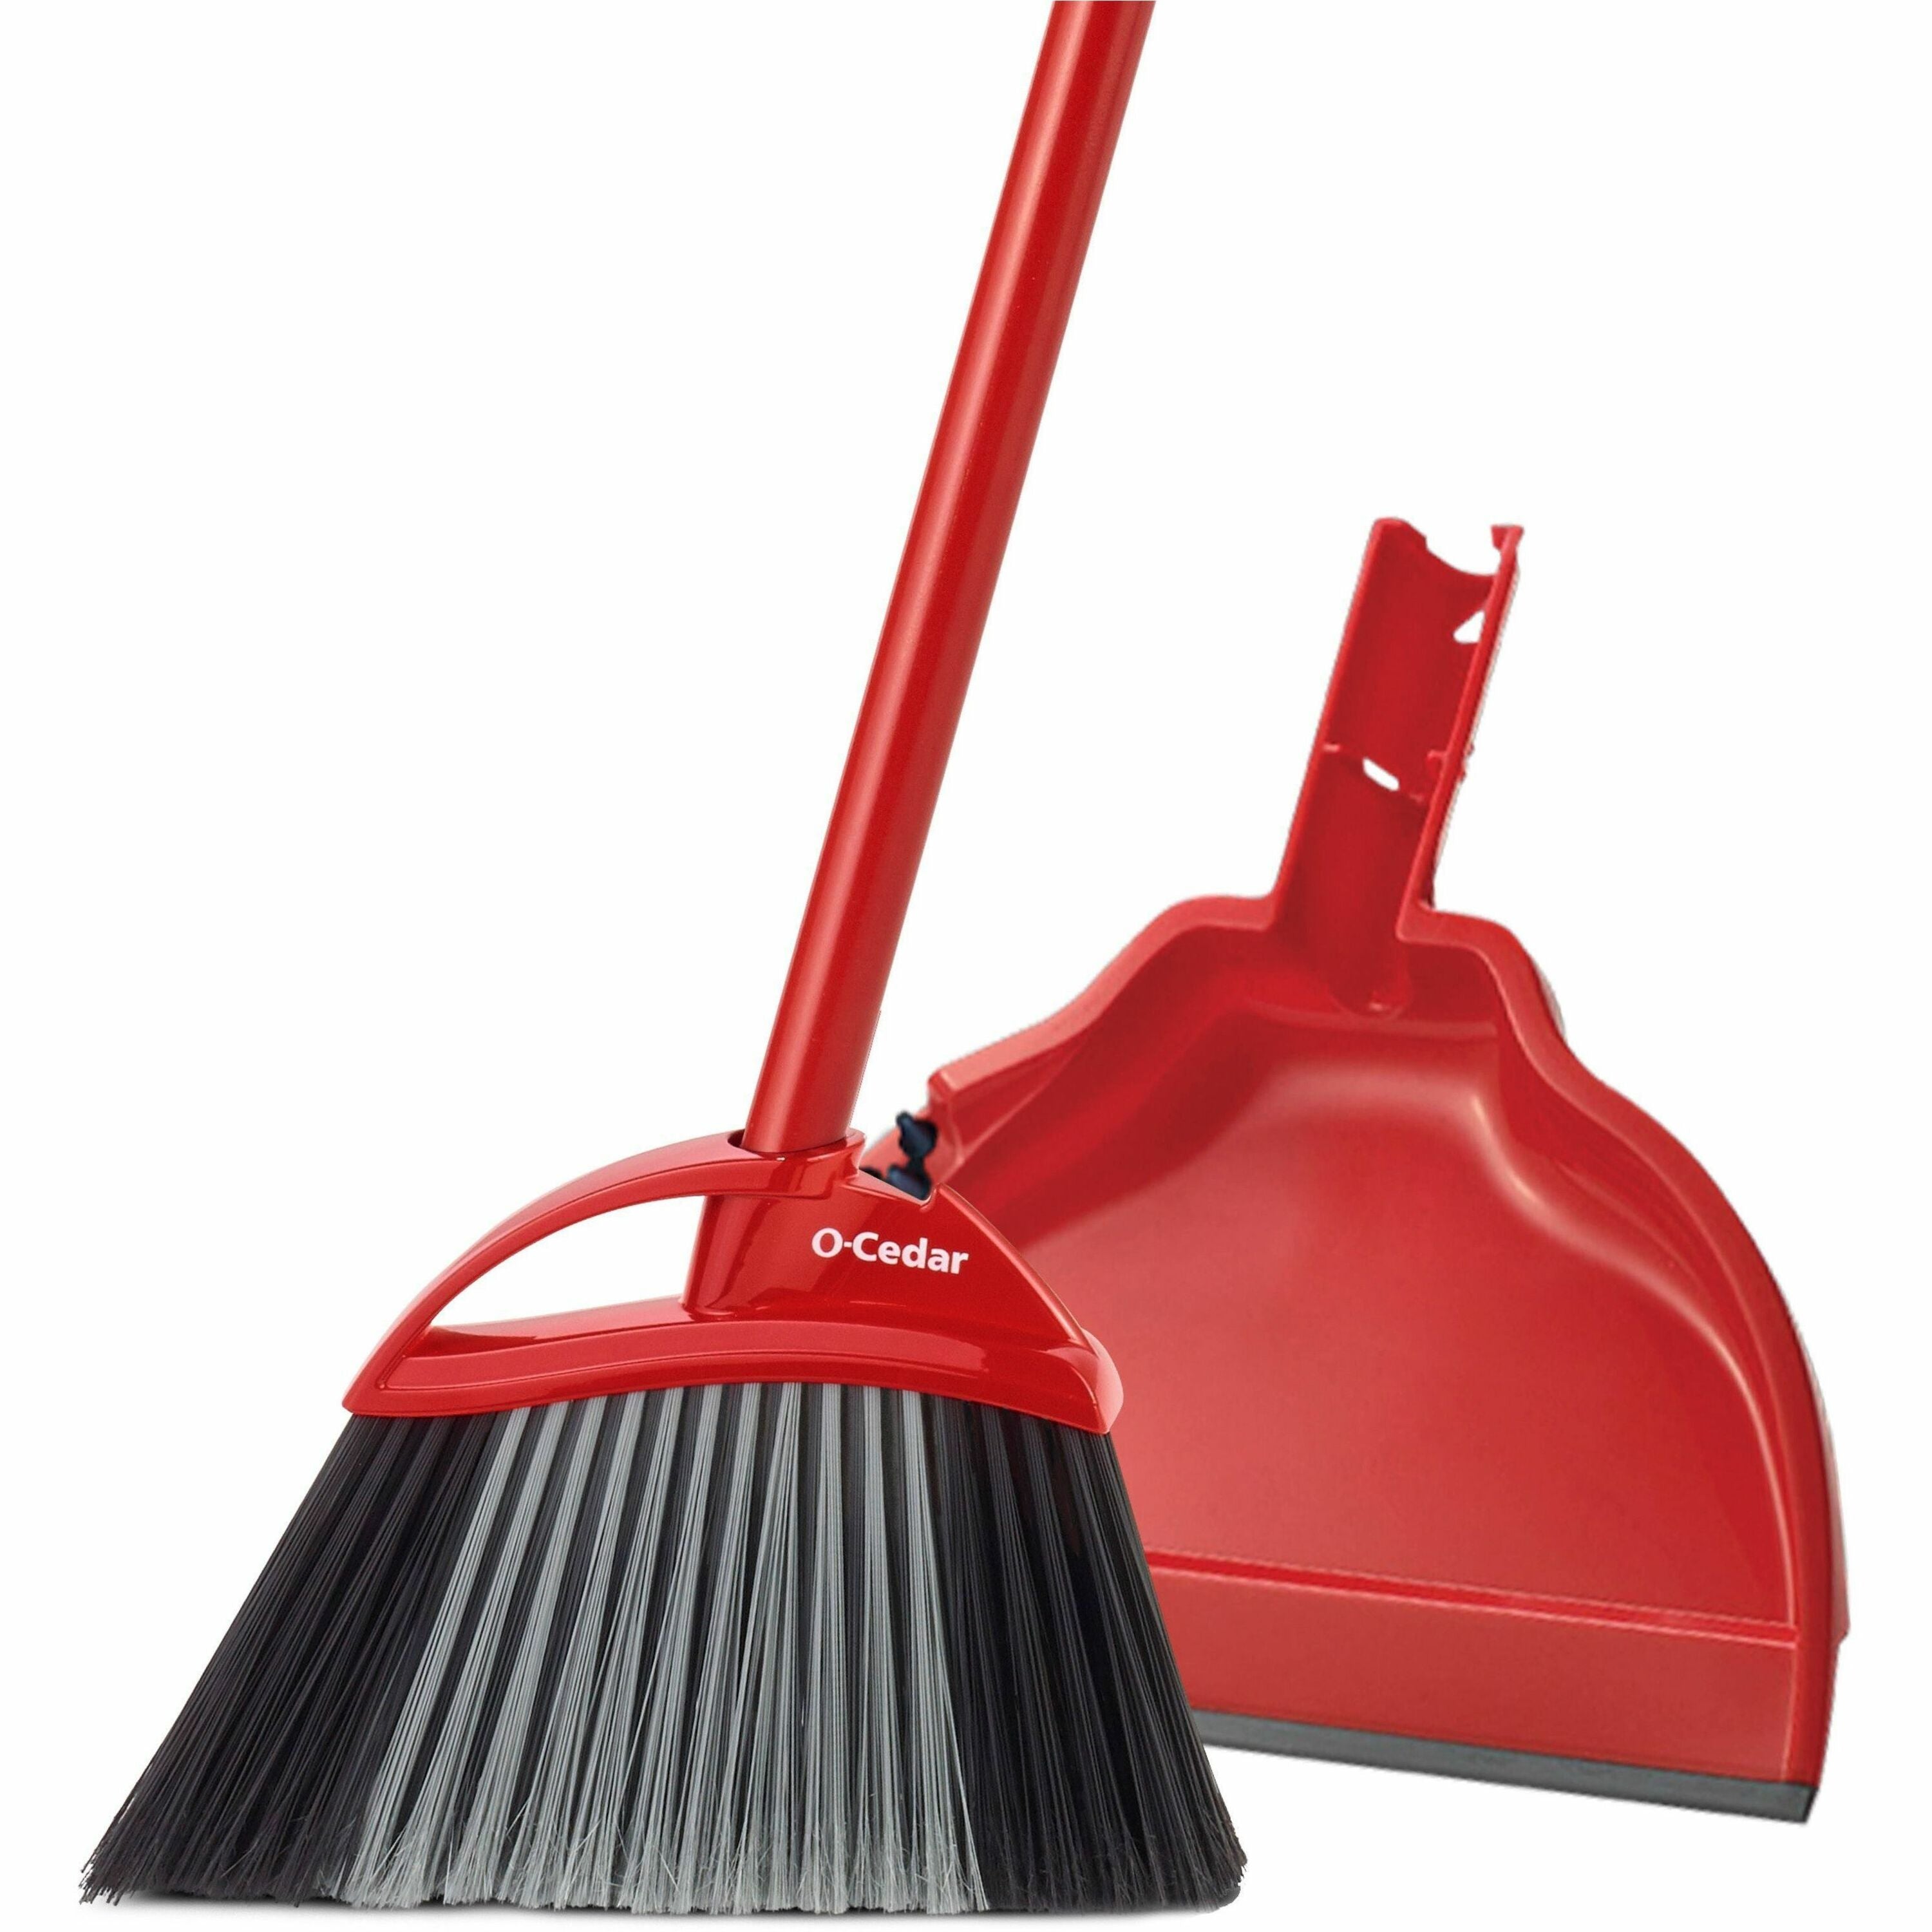 o-cedar-powercorner-angle-broom-black--gray-handle-1-each_fhp167420 - 1